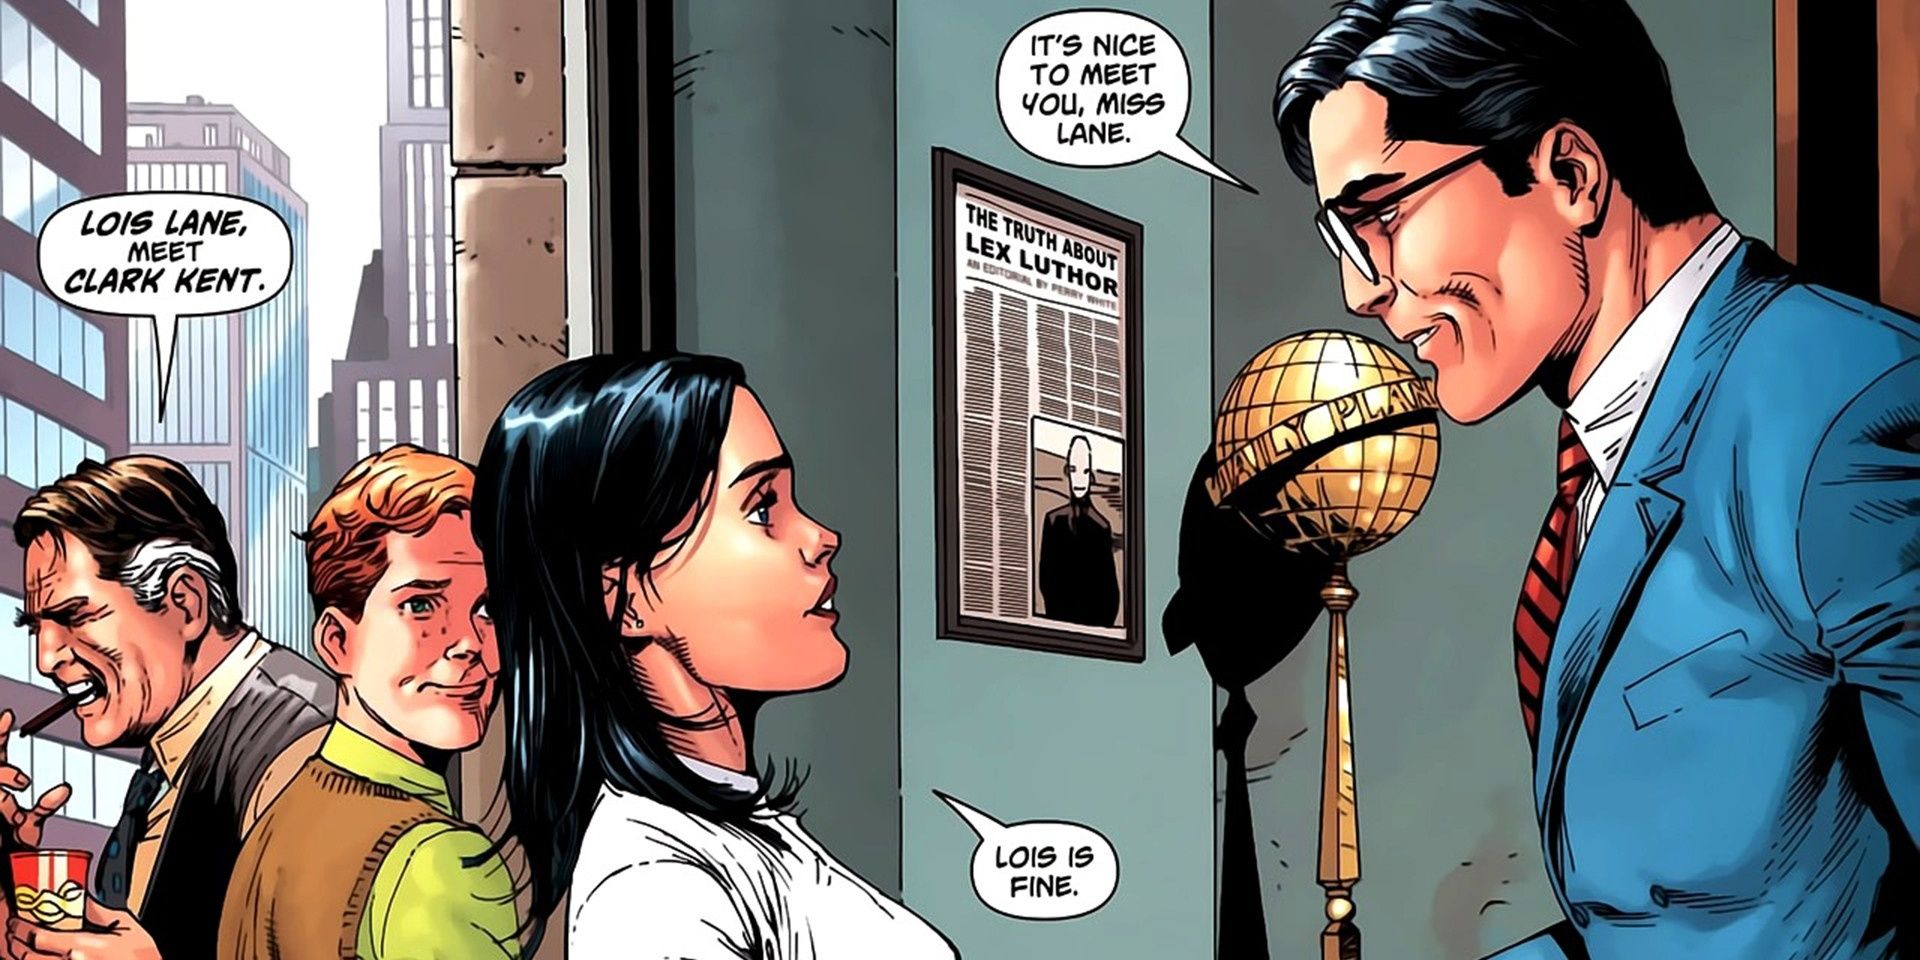 Lois Lane and Clark Kent